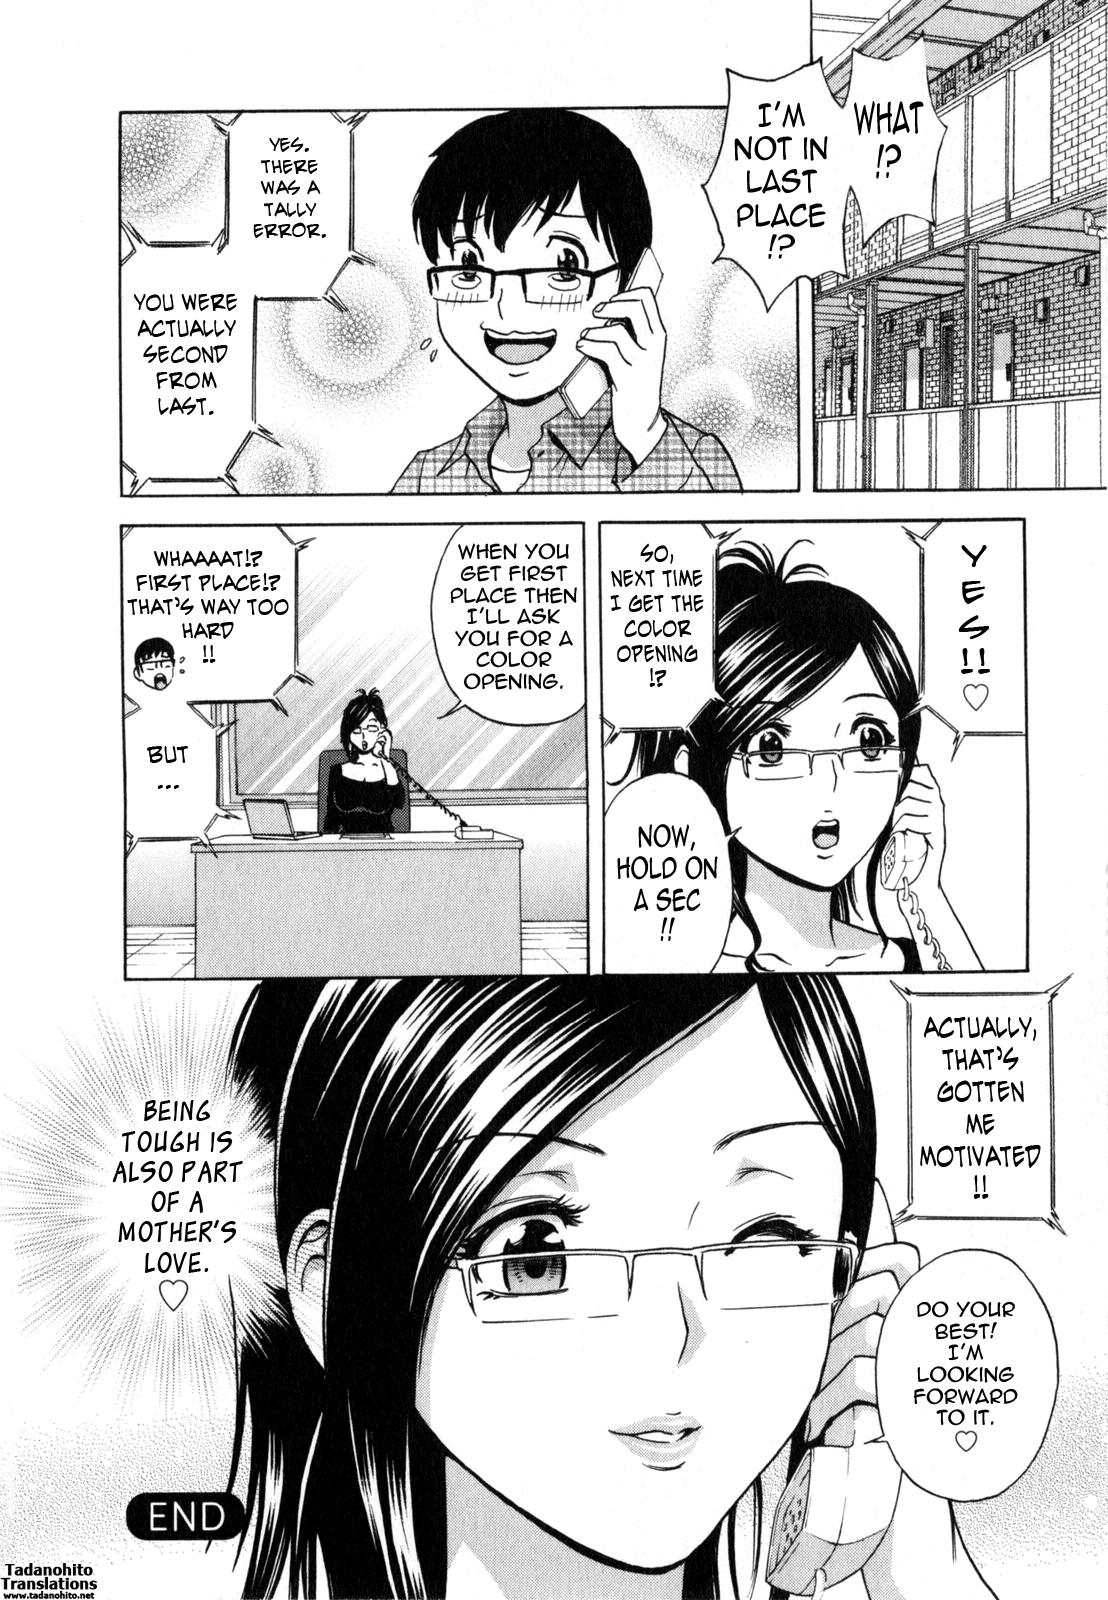 [Hidemaru] Life with Married Women Just Like a Manga 2 - Ch. 1-6 [English] {Tadanohito} 84